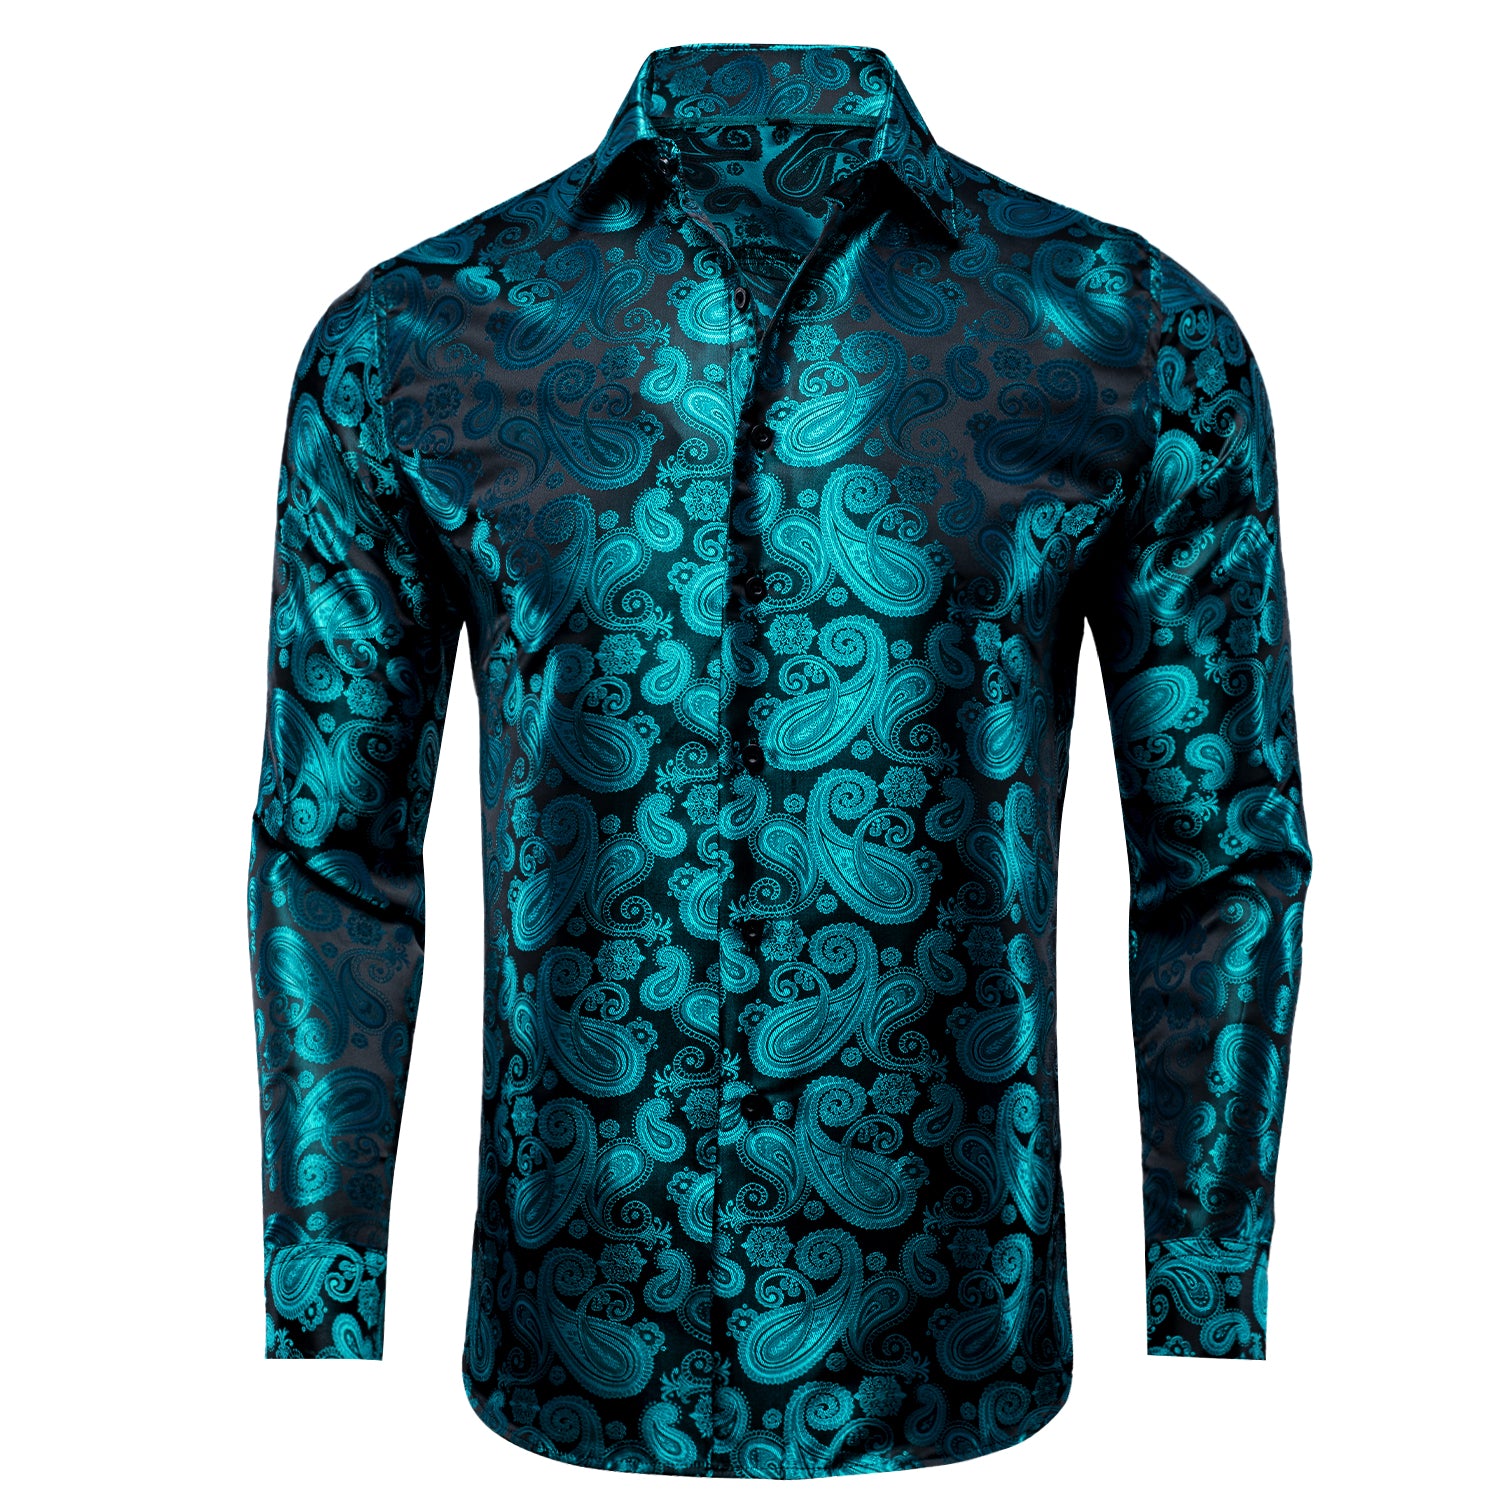 New Blue Black Paisley Silk Men's Long Sleeve Shirt Casual